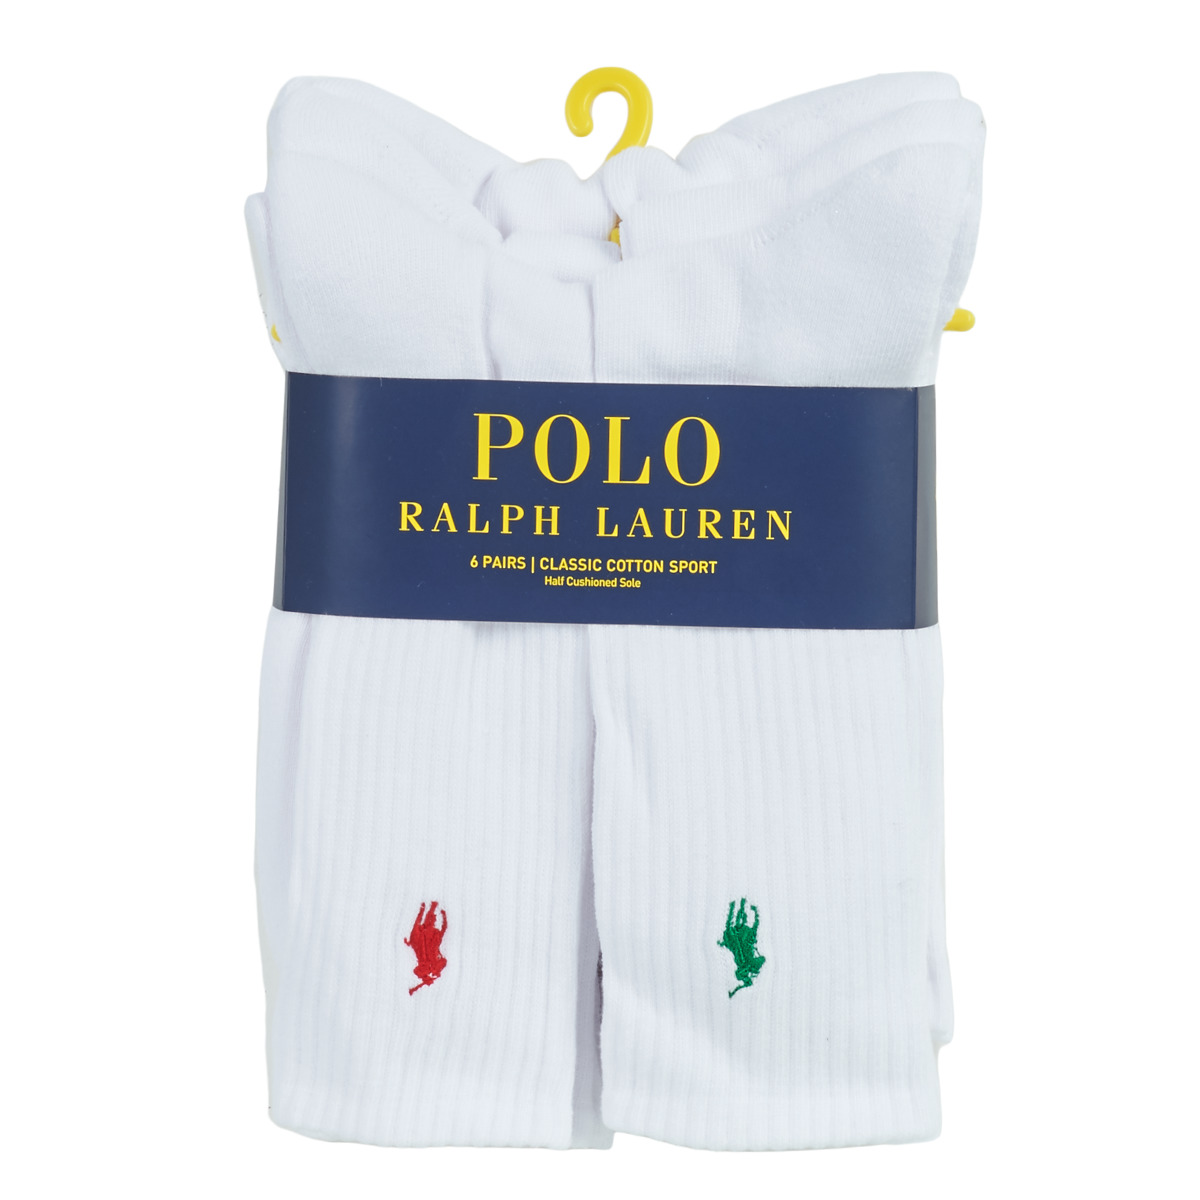 Accessorie Sports socks Polo Ralph Lauren ASX110 6 PACK COTTON White